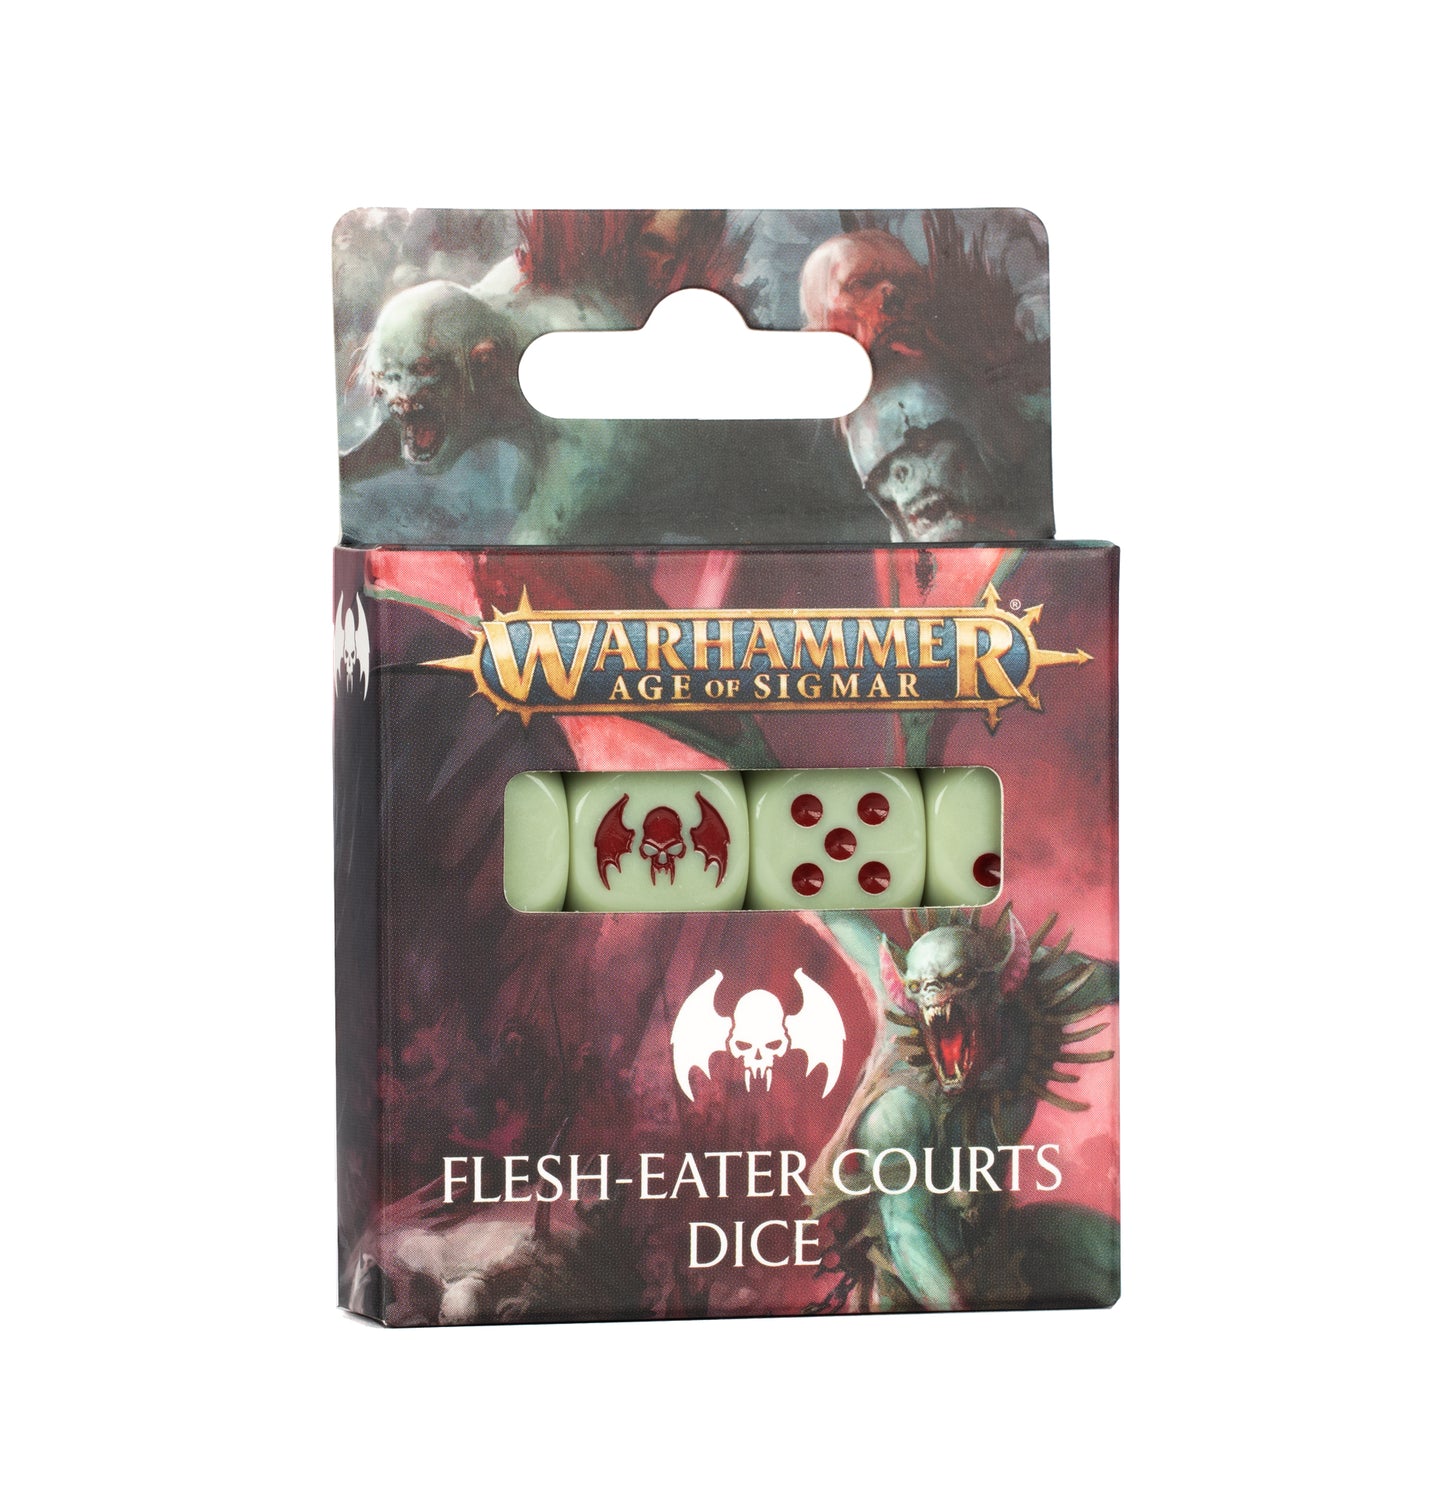 Flesh-eater Courts: Dice Set product image.